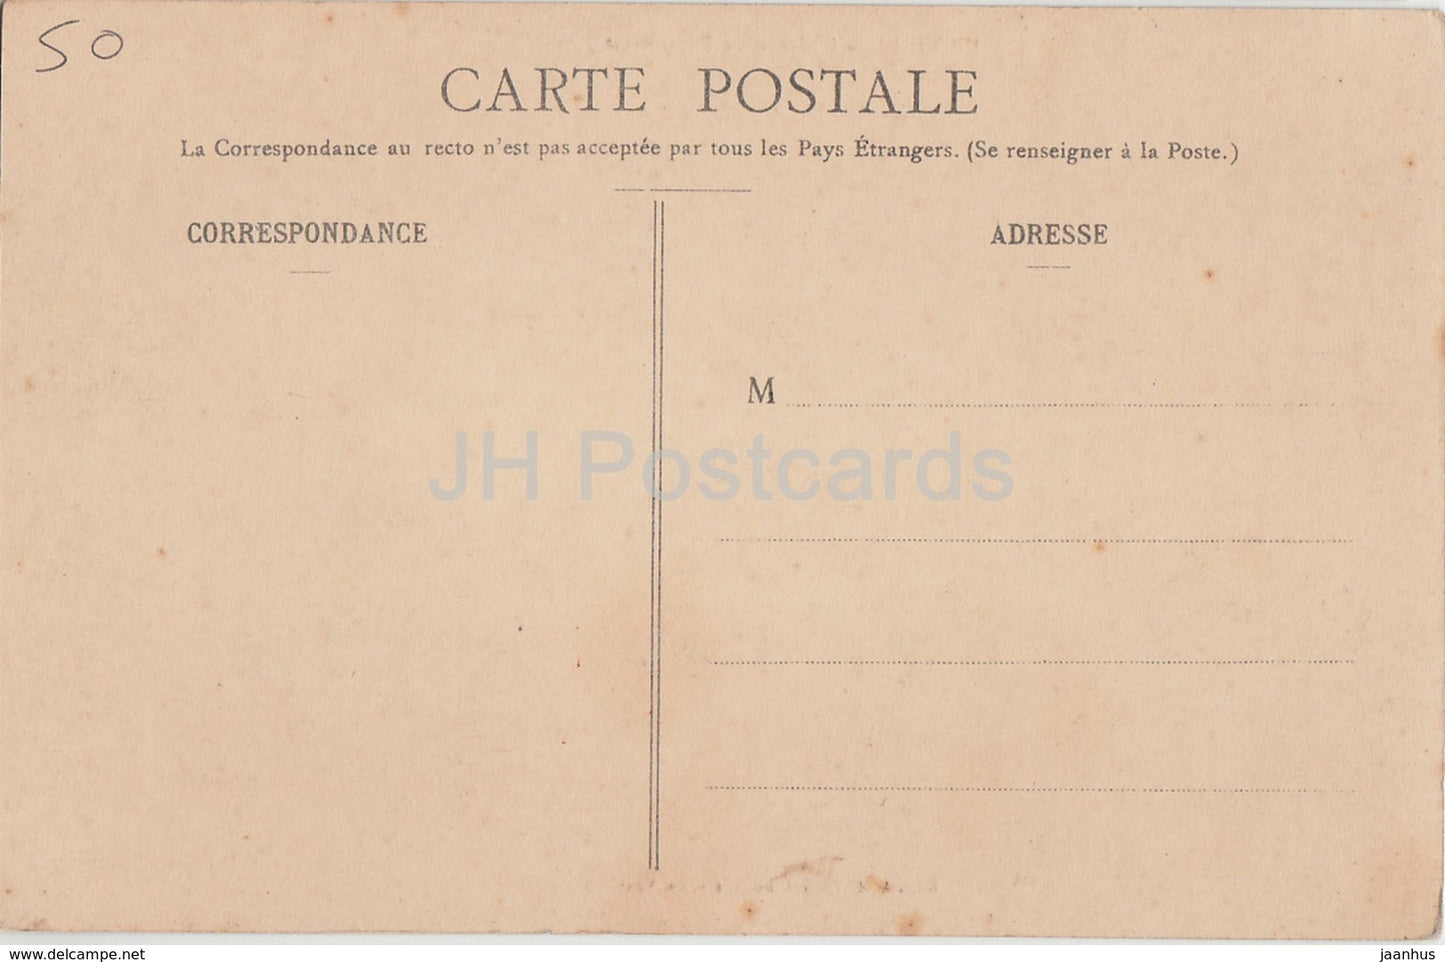 Le Vicel - Chateau de Pepinvast - castle - old postcard - France - unused